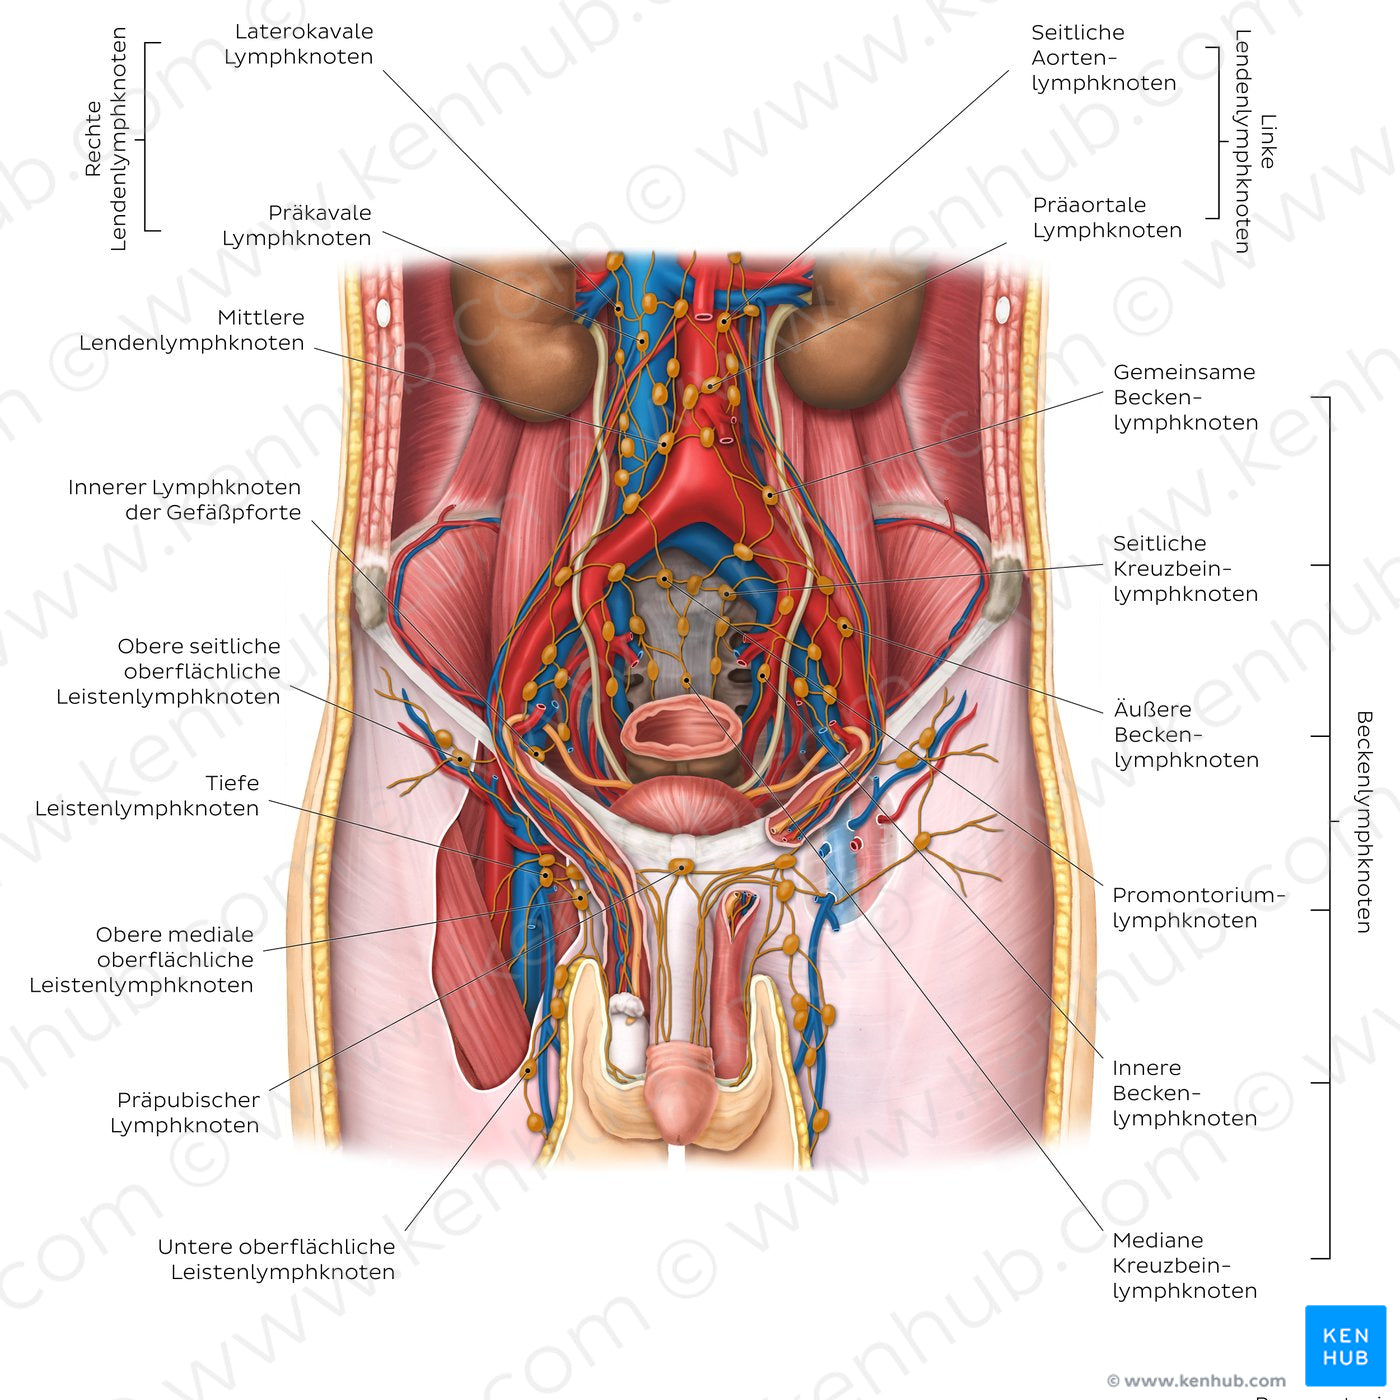 Lymphatics of the male genitalia (German)